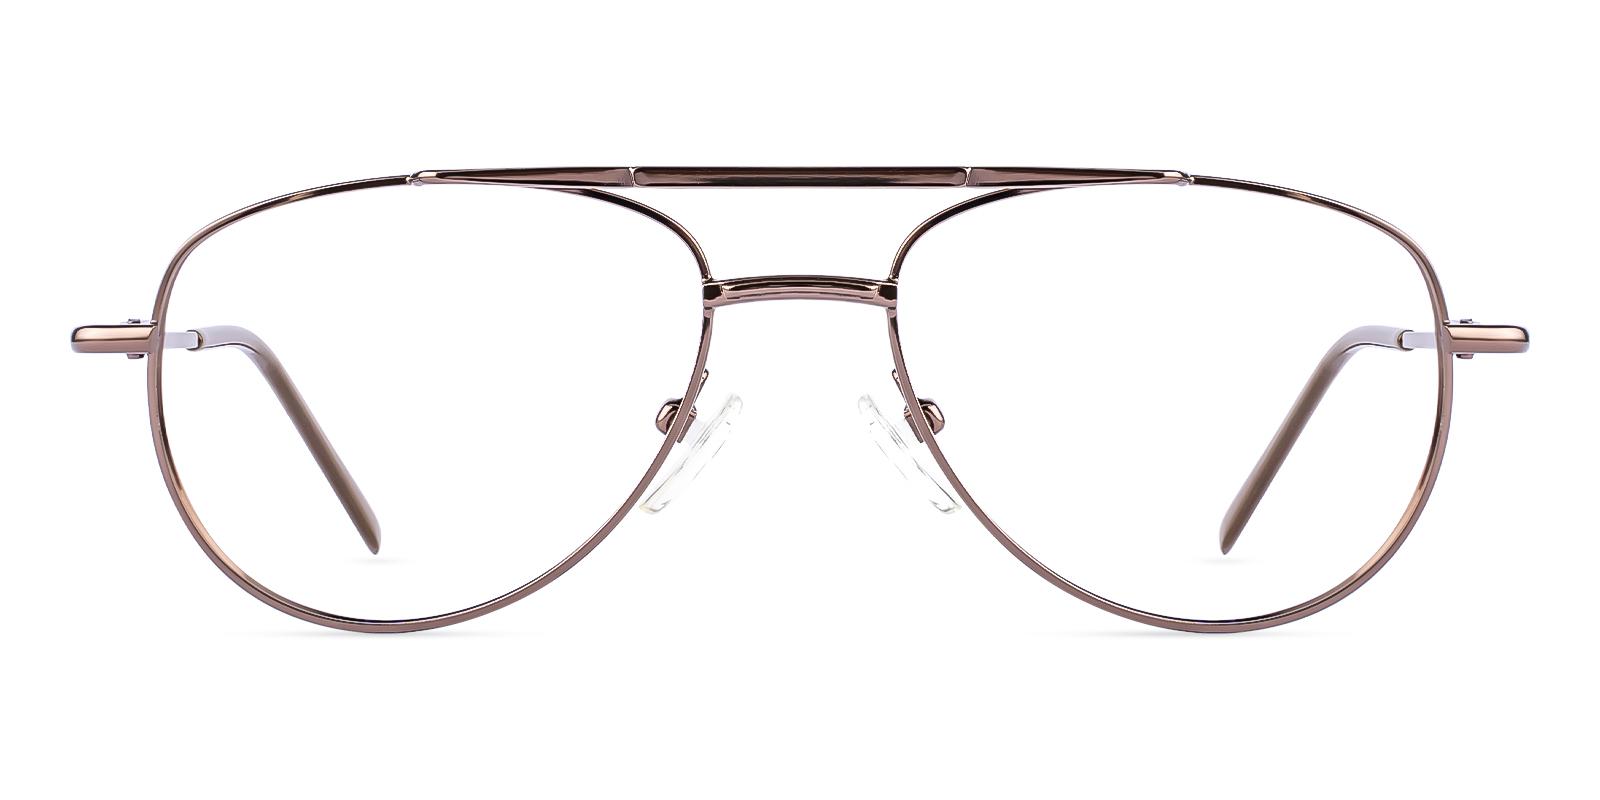 Extrpu Brown Metal Eyeglasses , NosePads , SpringHinges Frames from ABBE Glasses